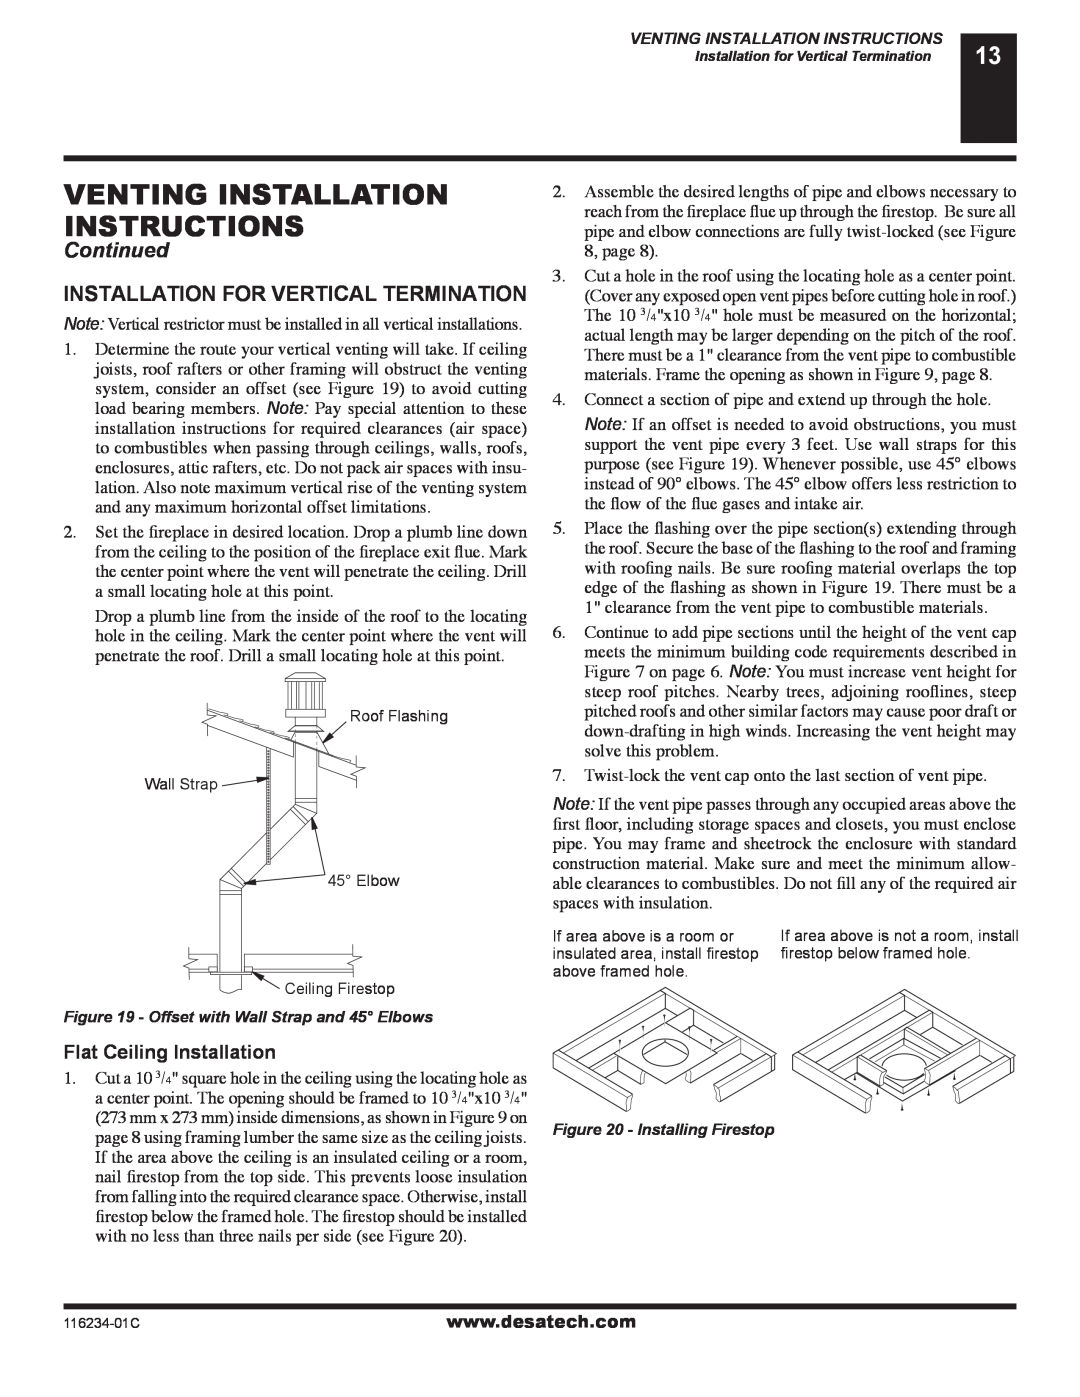 Desa (V)TC36NE SERIES Venting Installation Instructions, Continued, Installation For Vertical Termination 